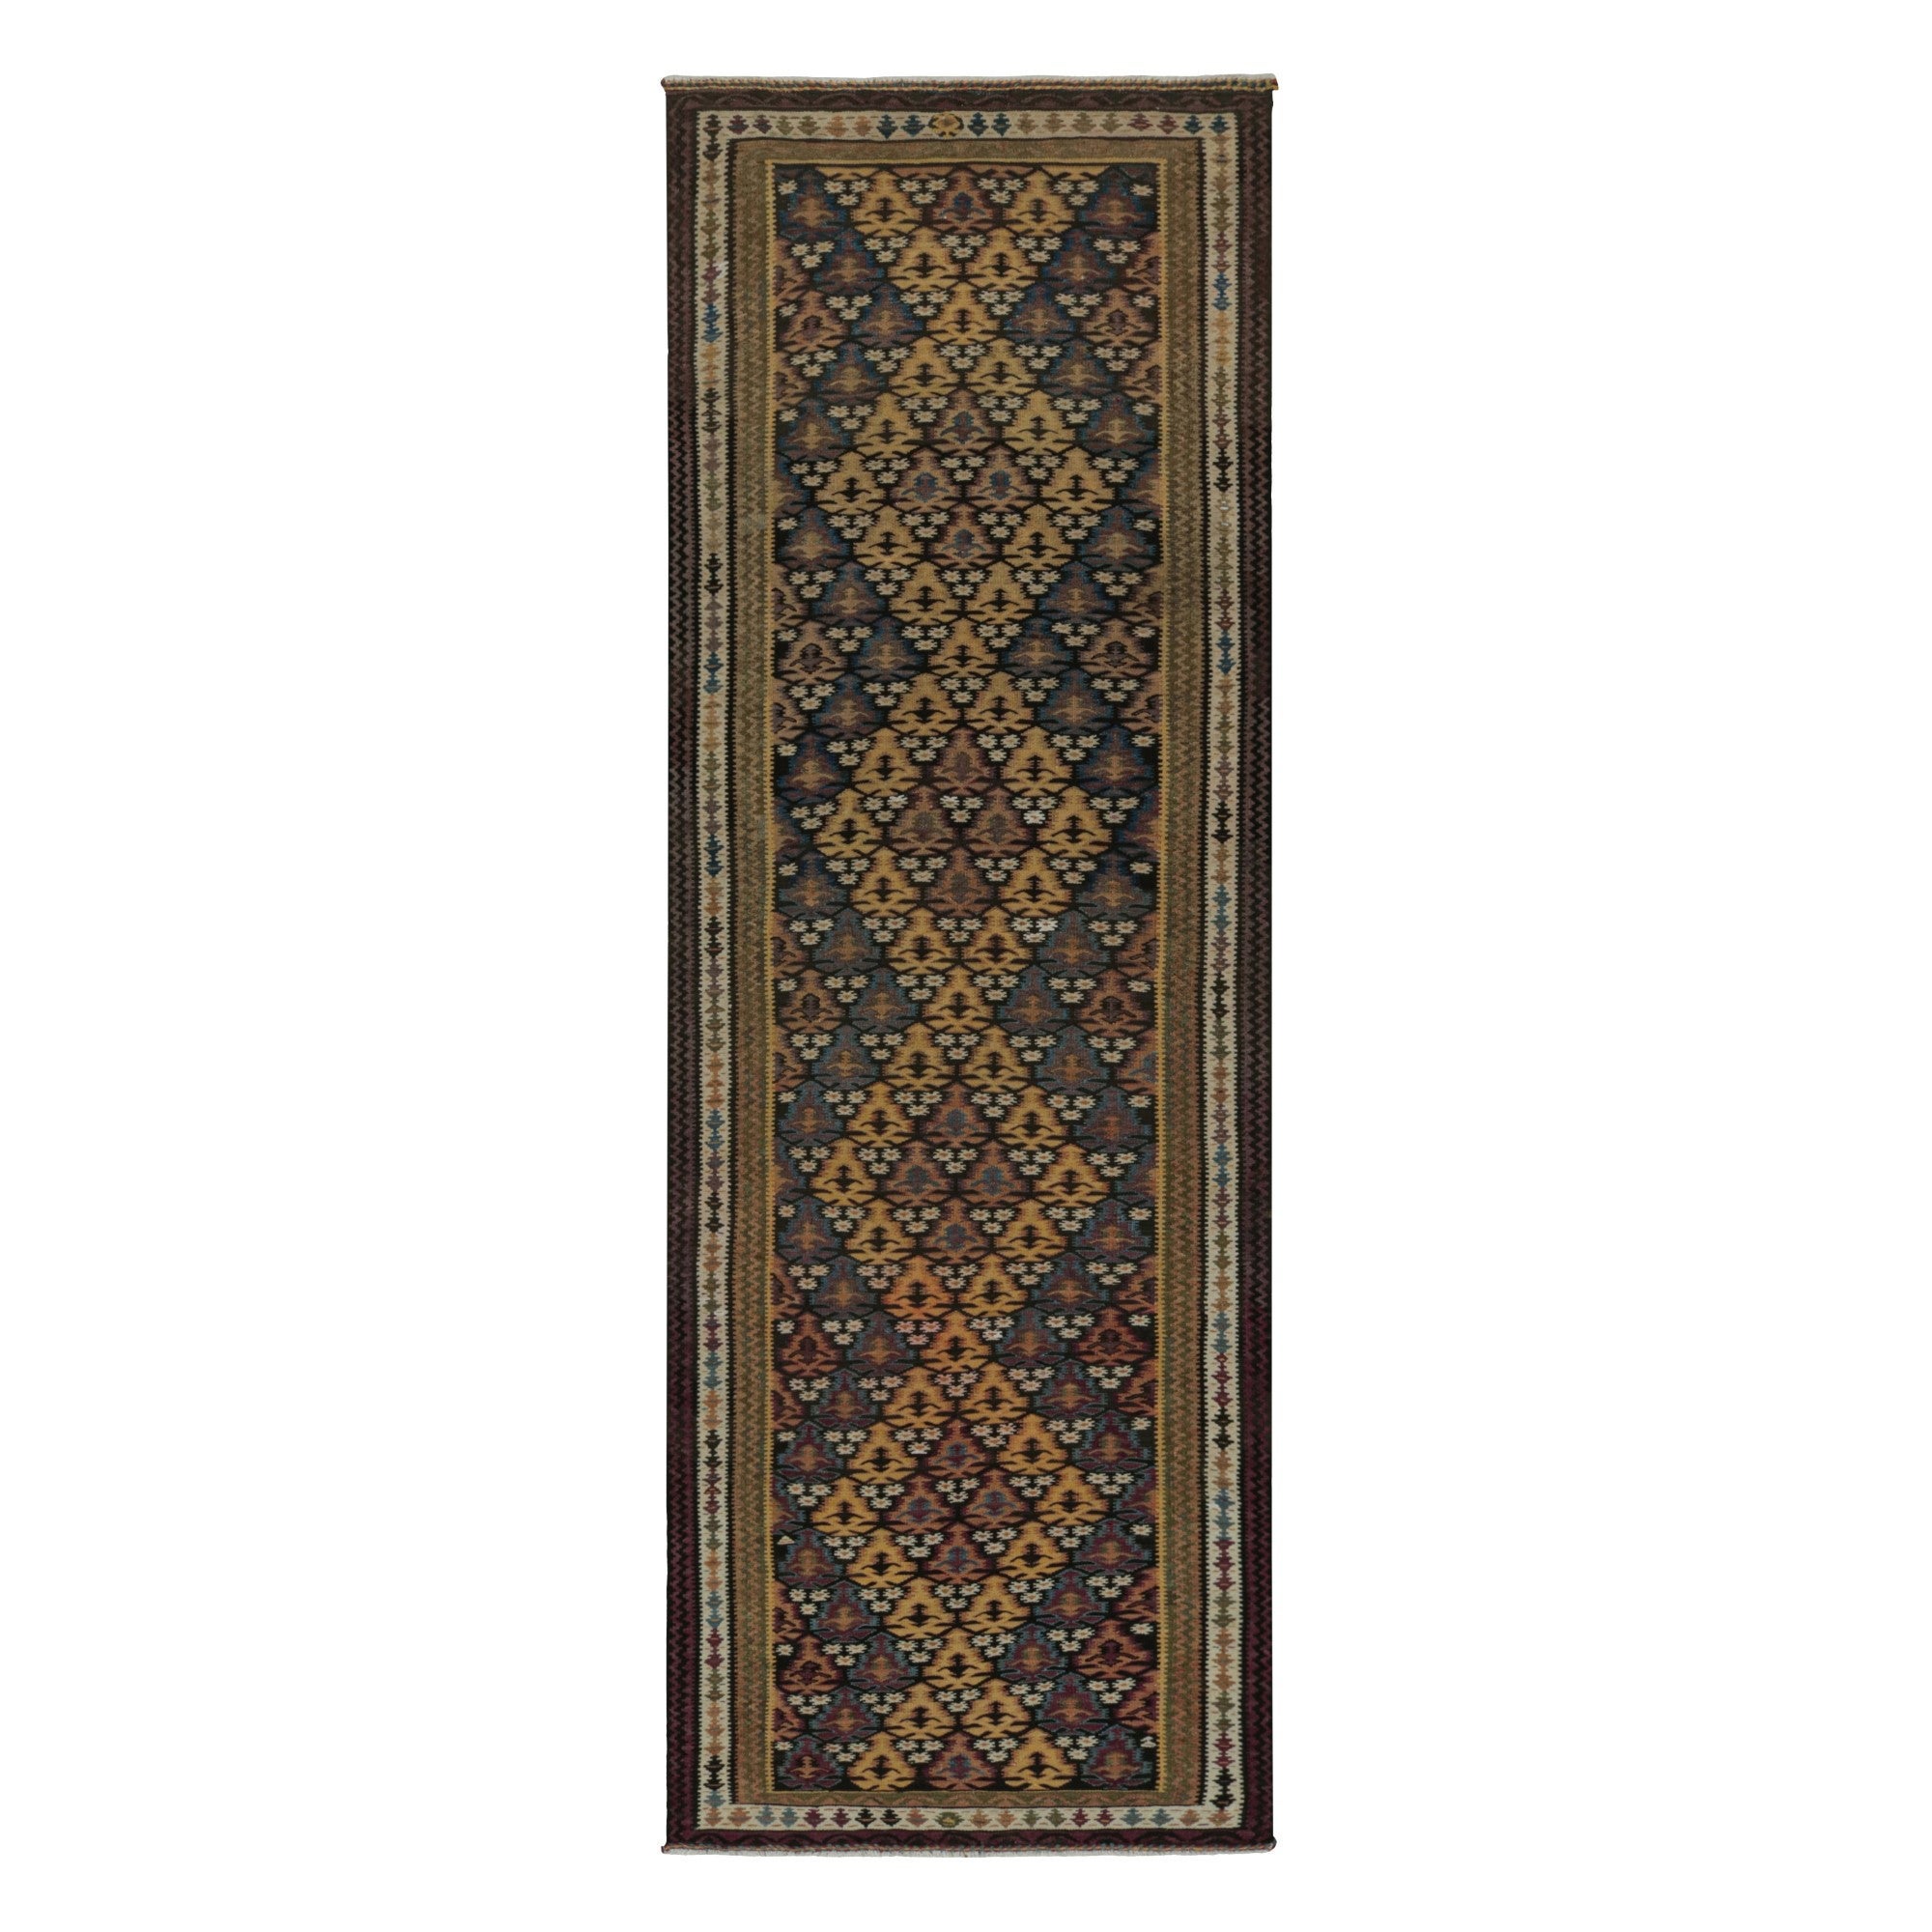 Vintage Tribal Kilim runner rug with Polychromatic Patterns by Rug & Kilim